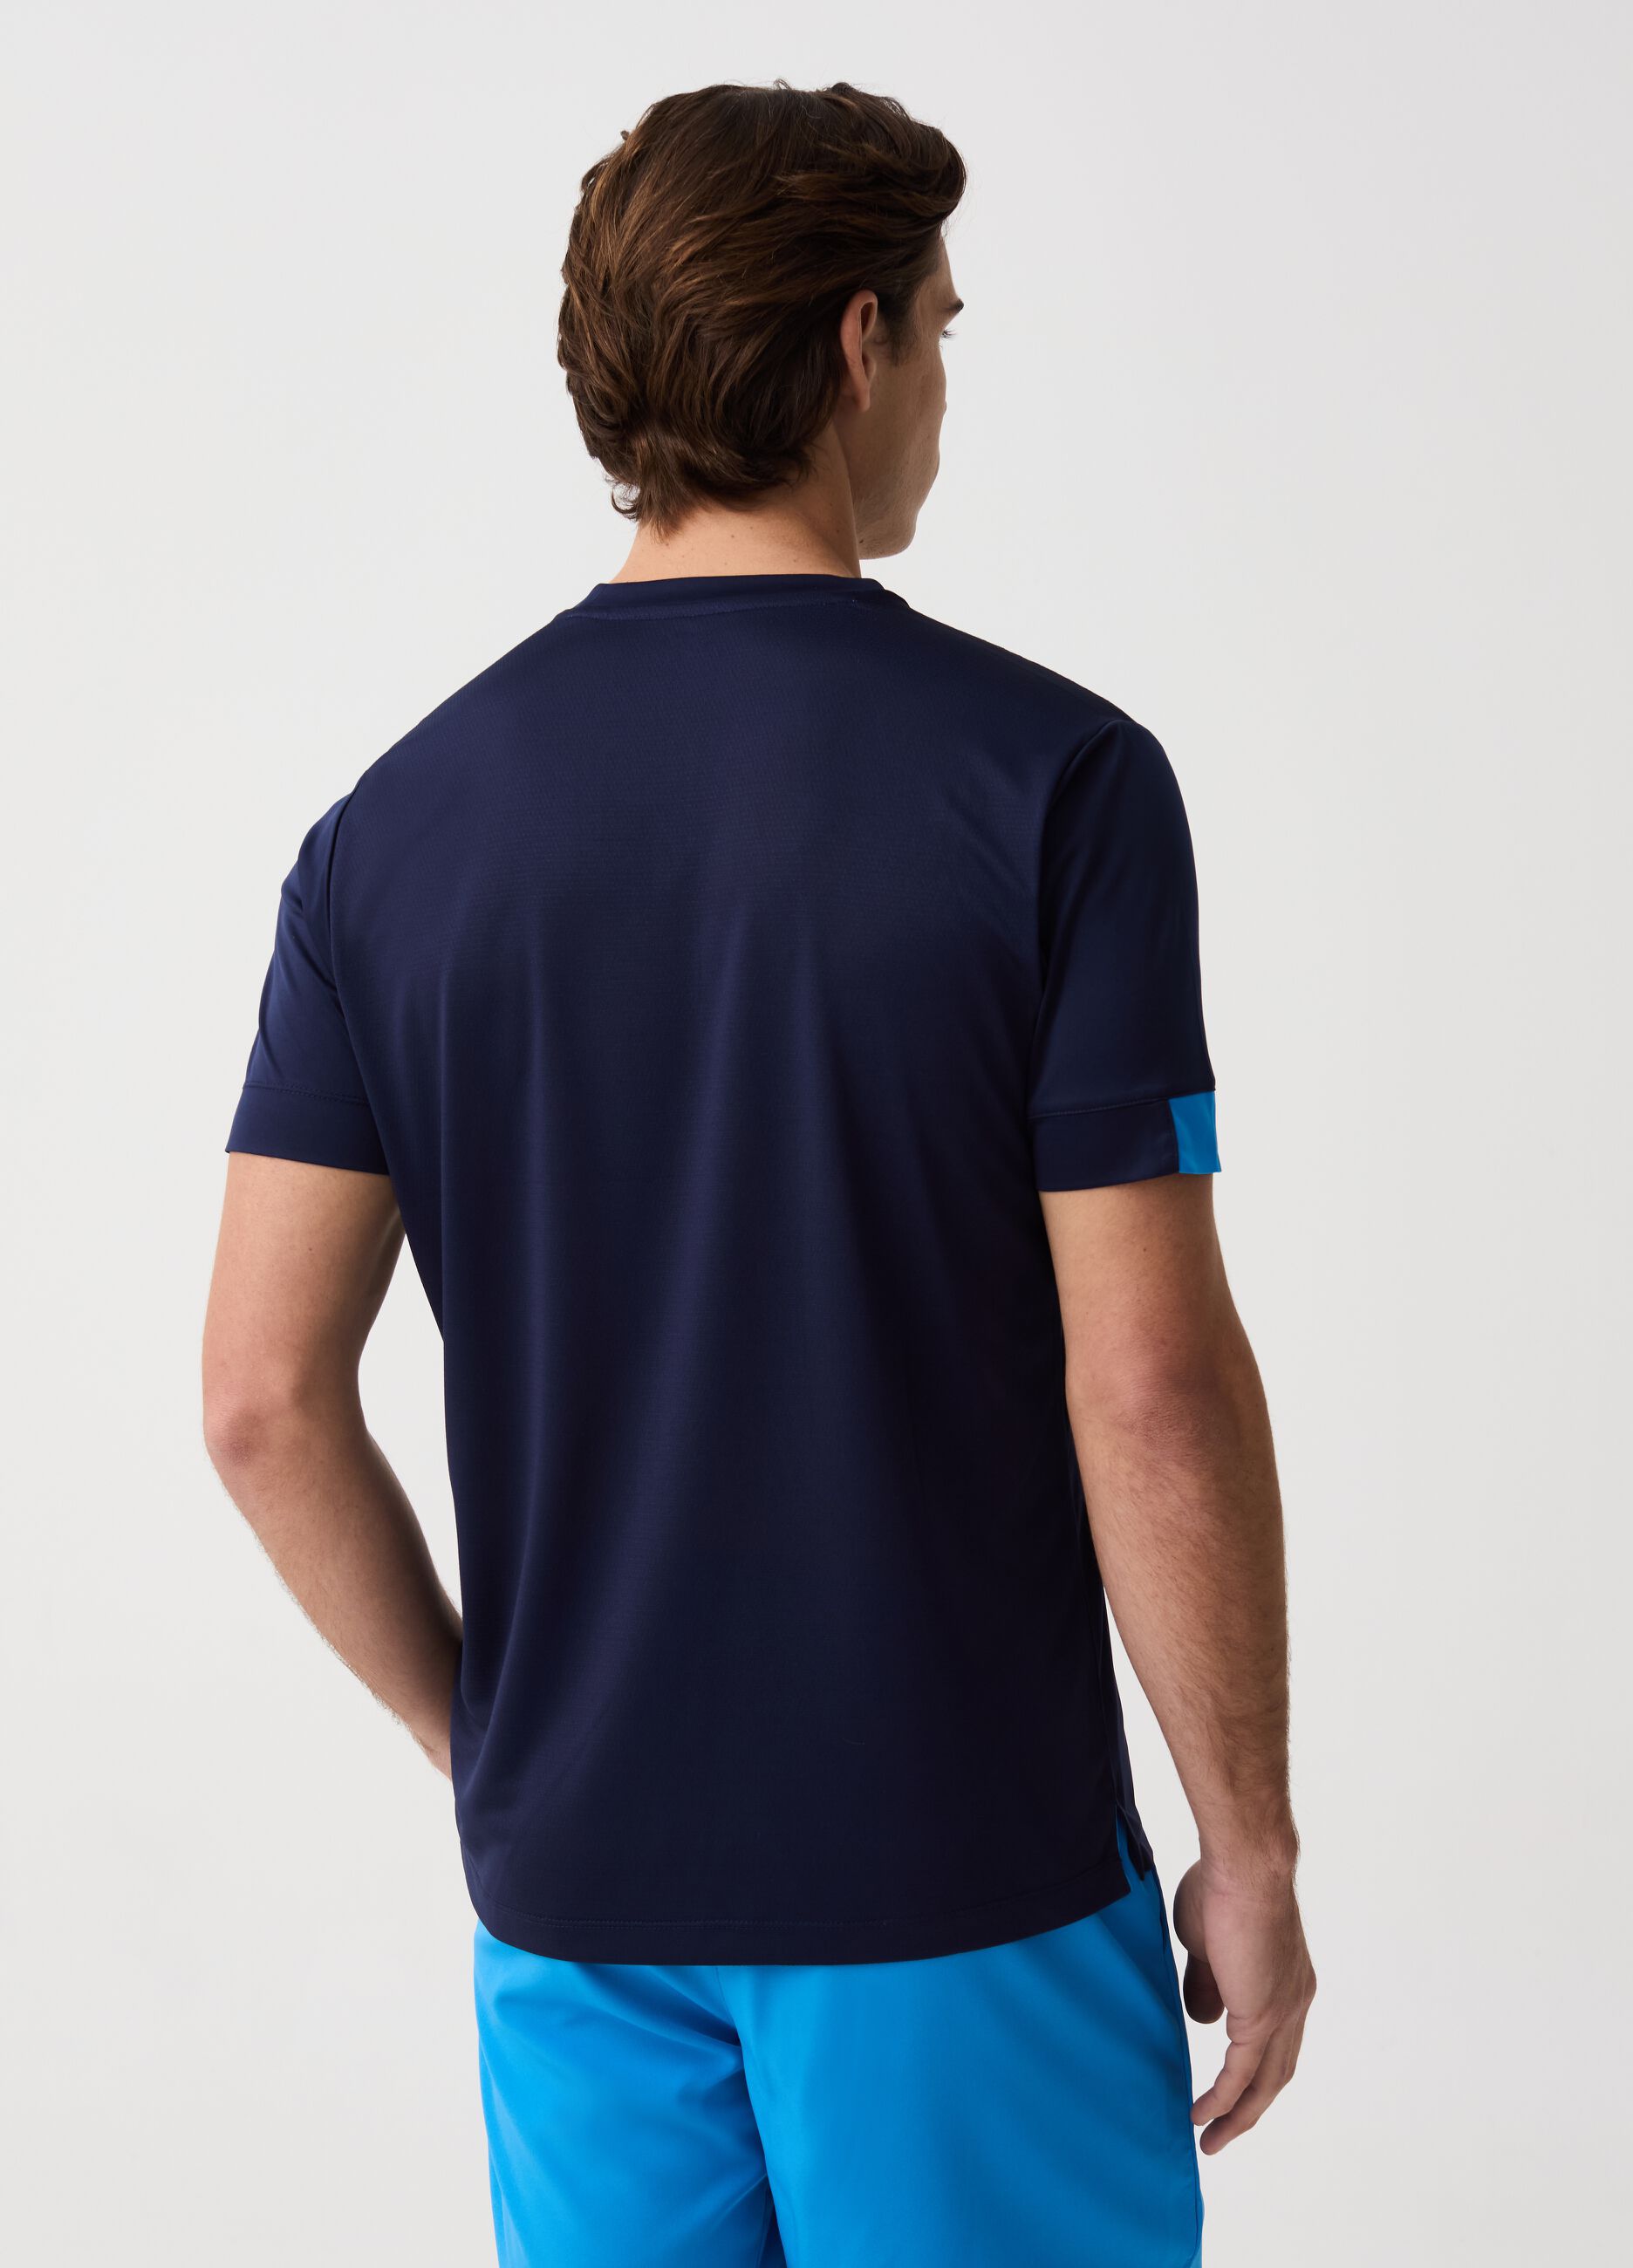 Quick-dry tennis T-shirt with Slazenger print